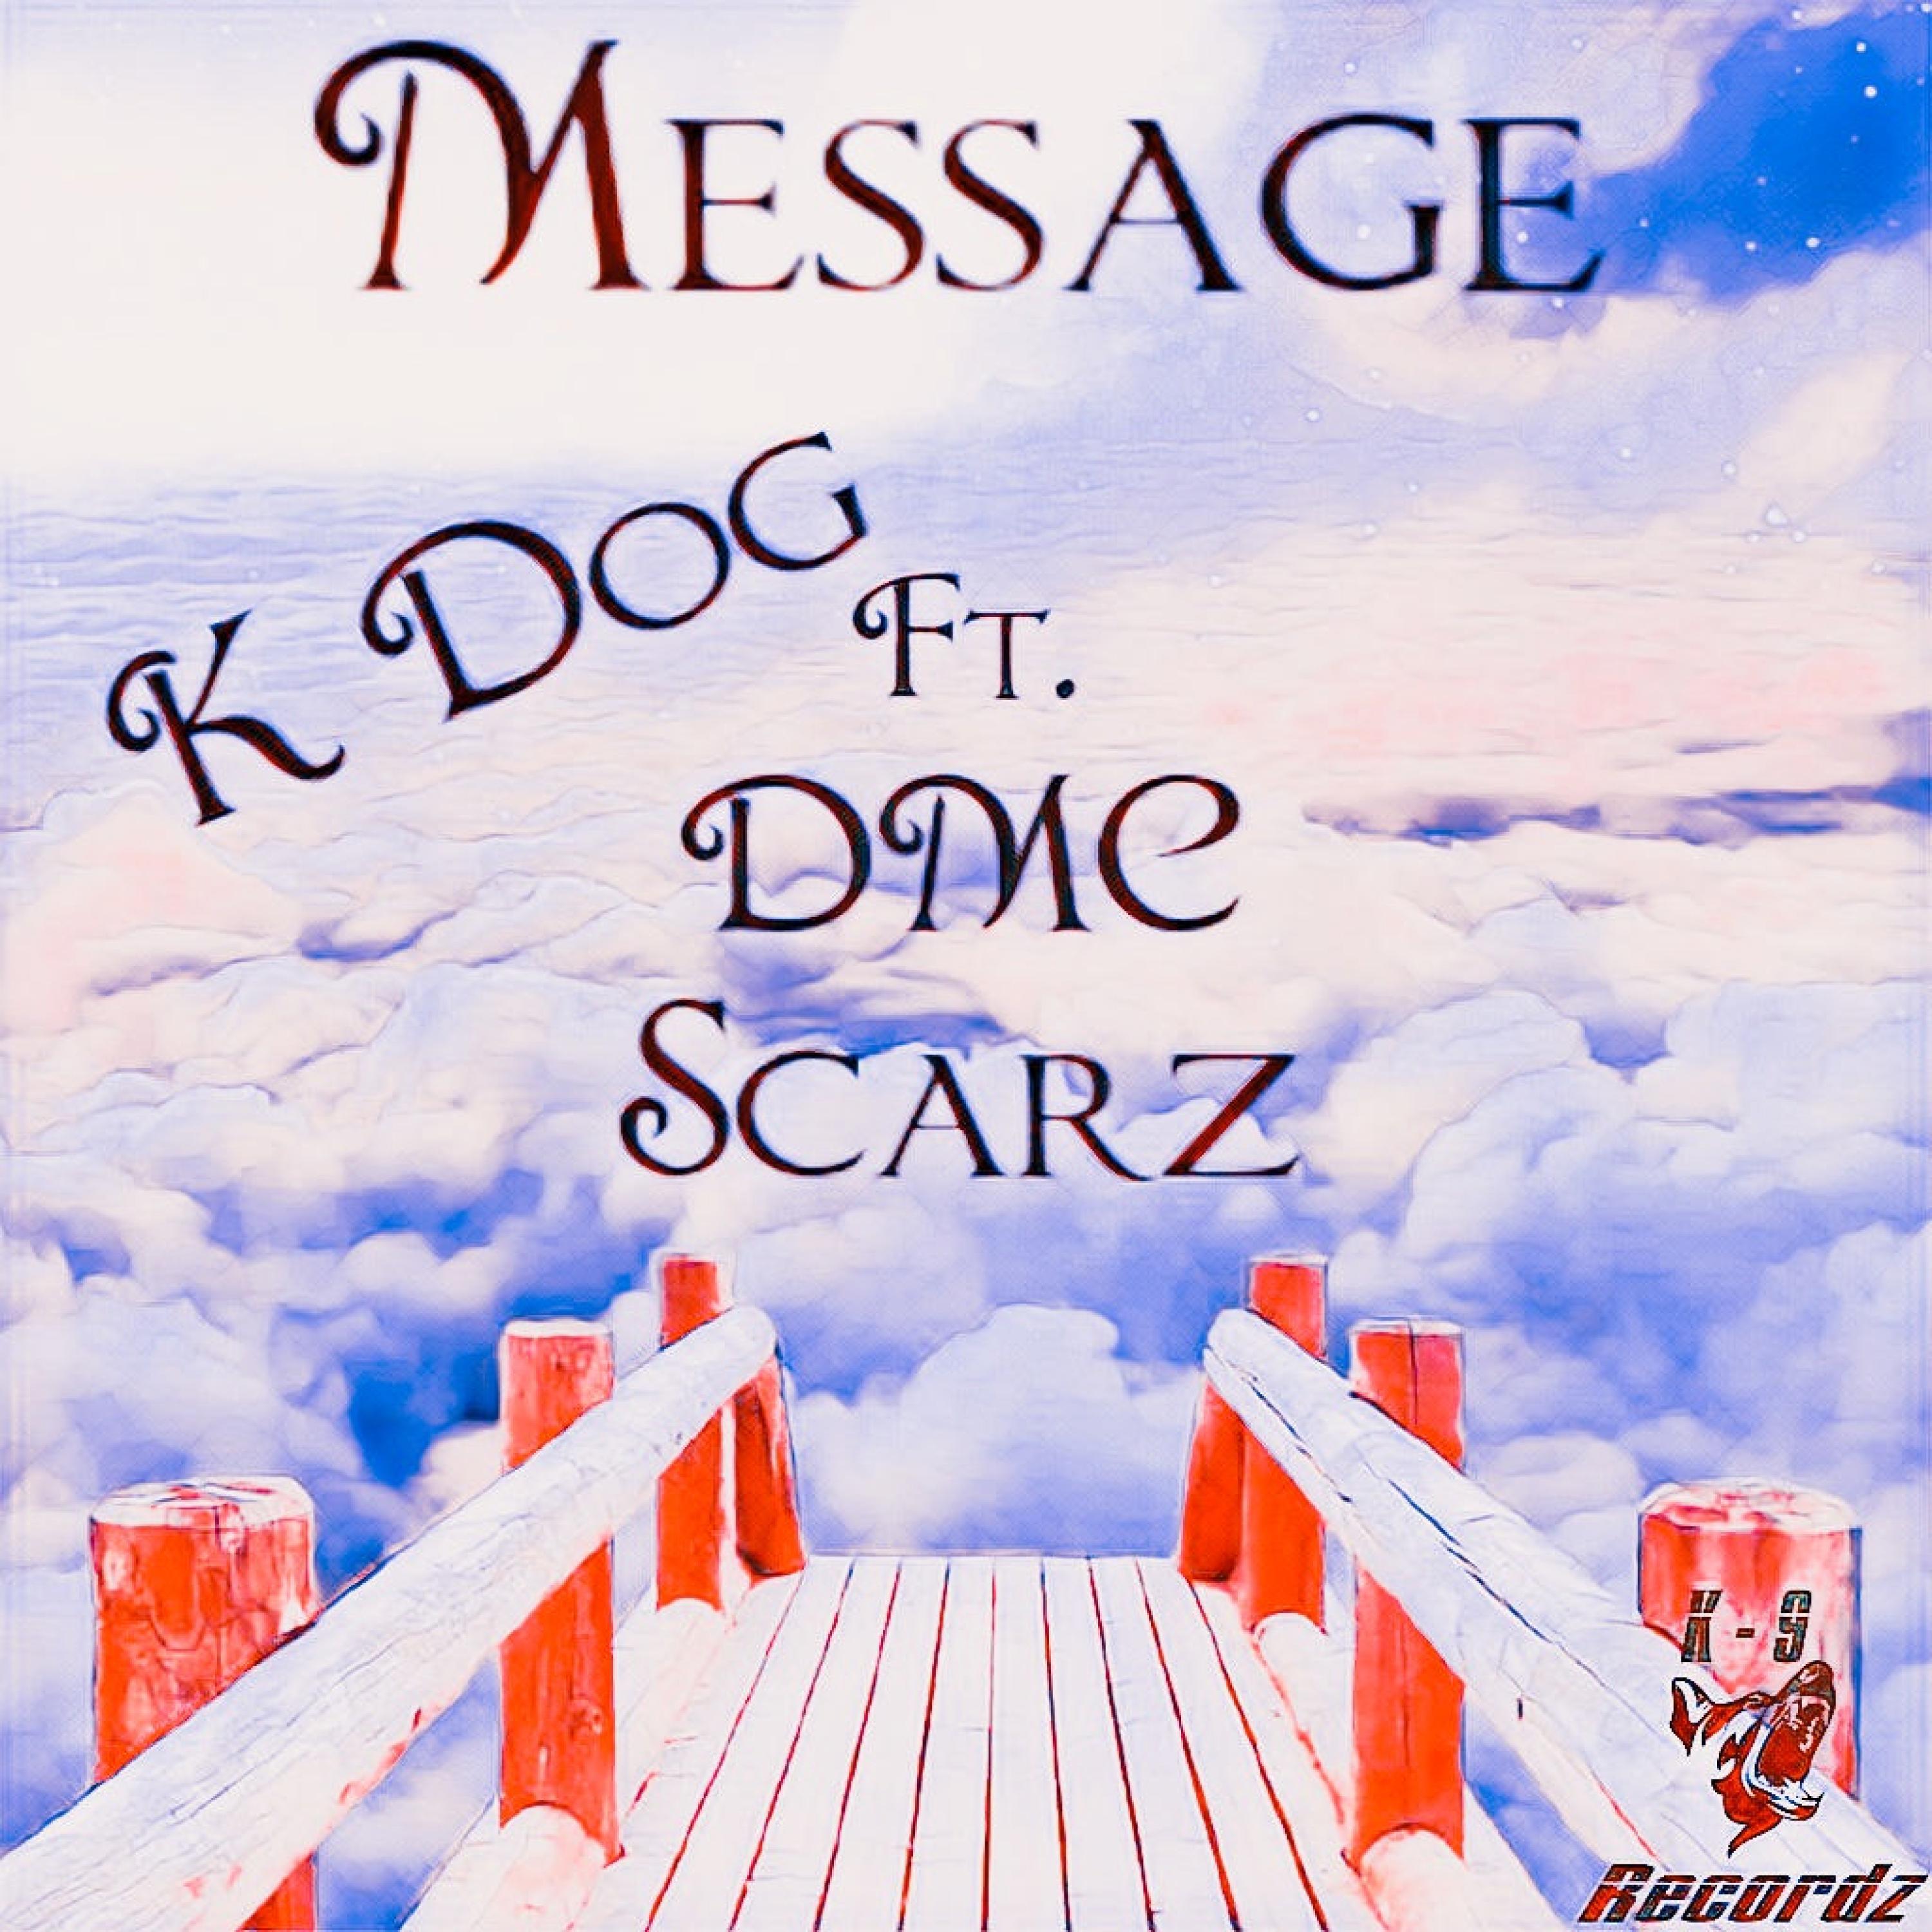 K Dog - Message (feat. D.M.C. & Scarz)